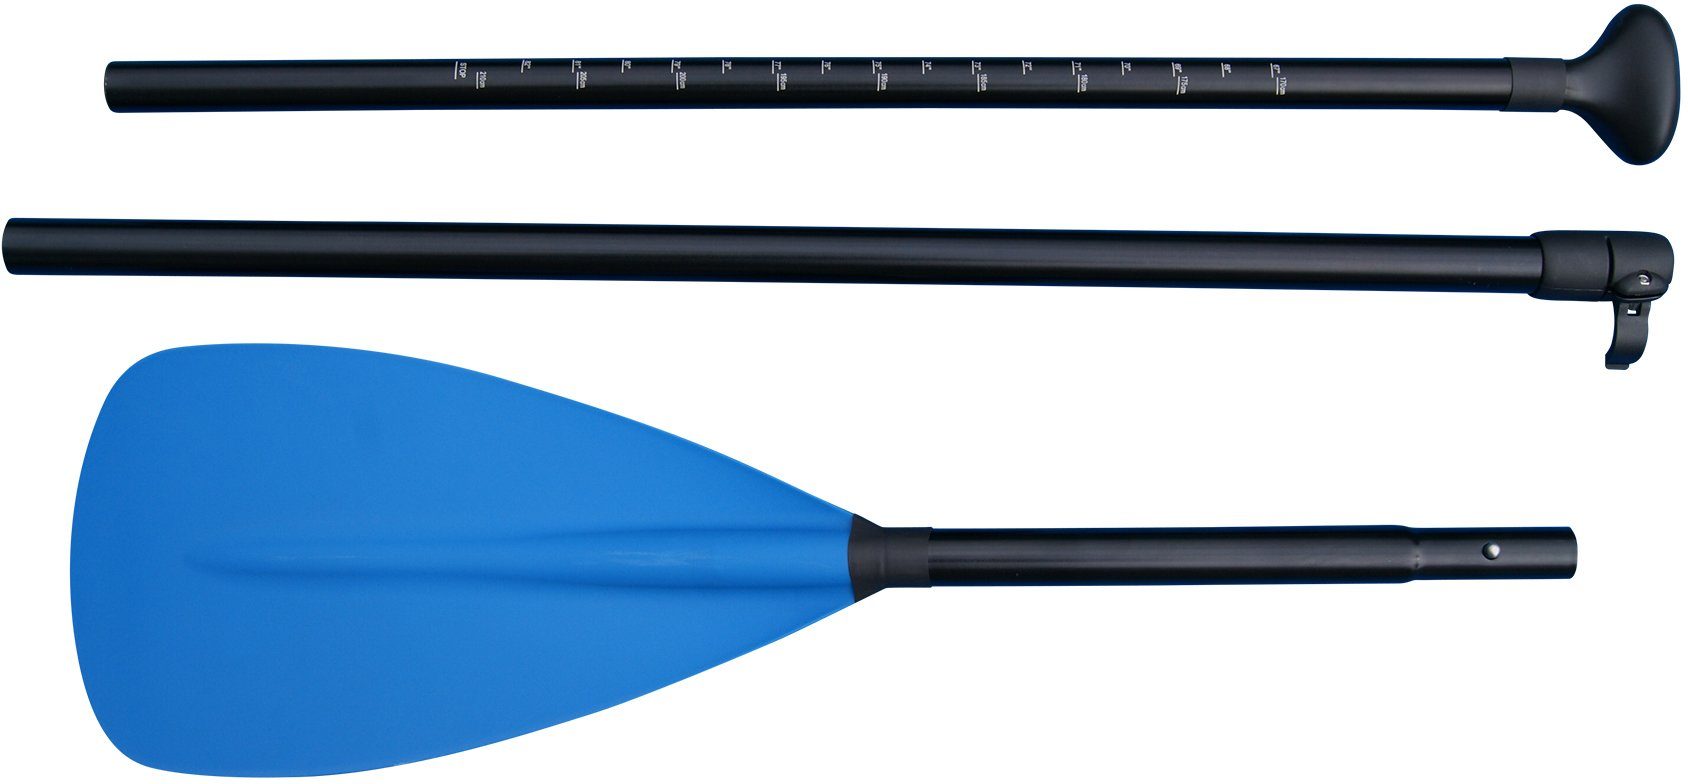 (6 KOHALA blau/weiss Kohala, SUP-Board Inflatable tlg)